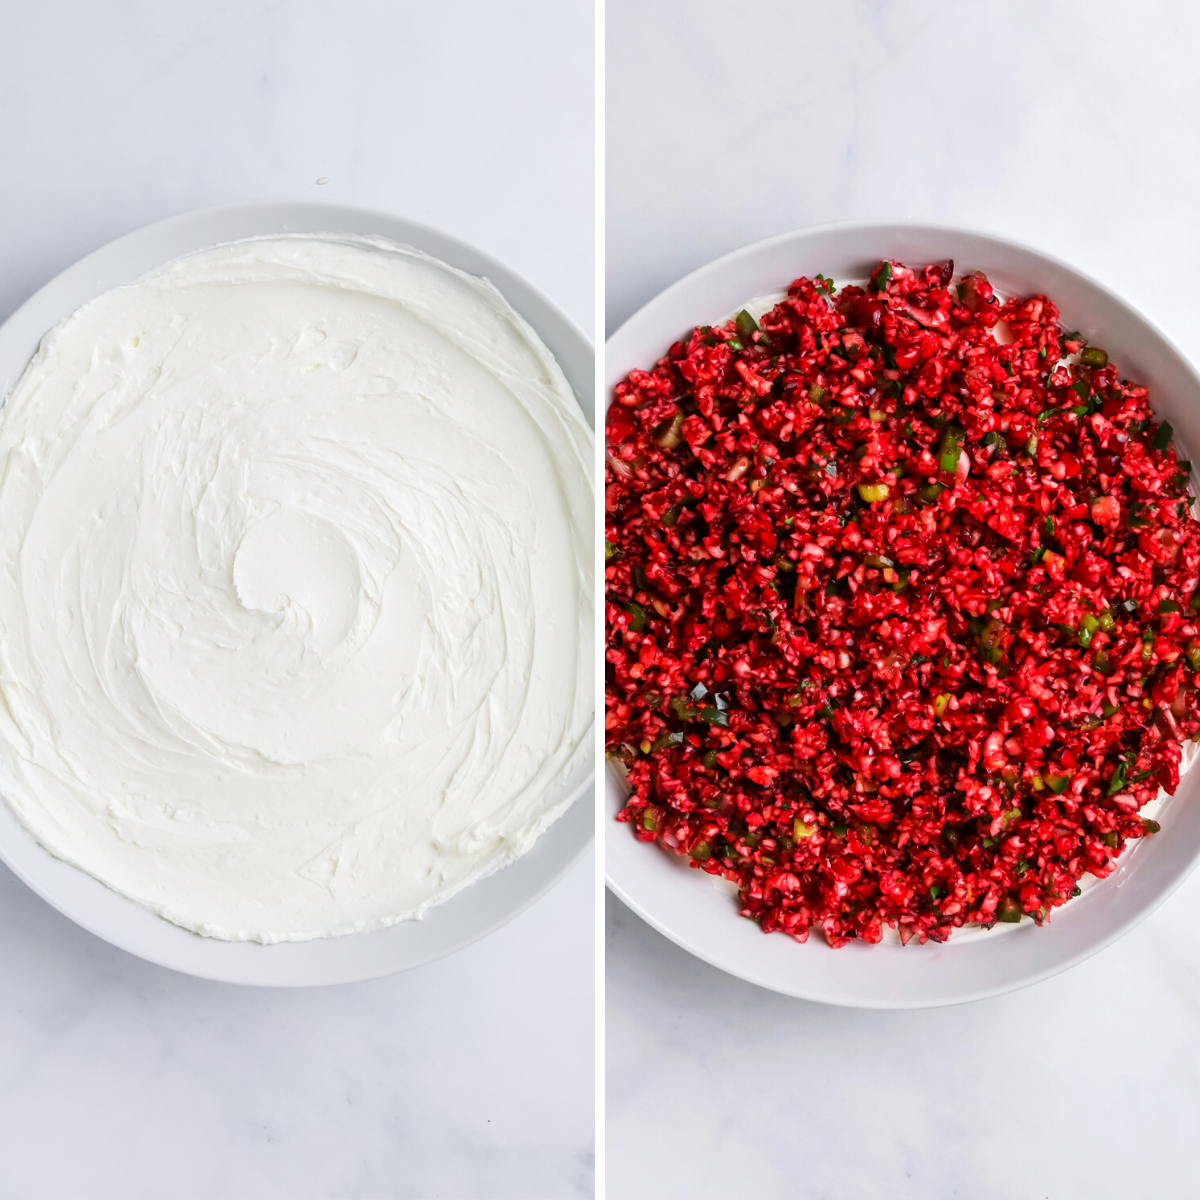 How to make cranberry jalapeno dip.